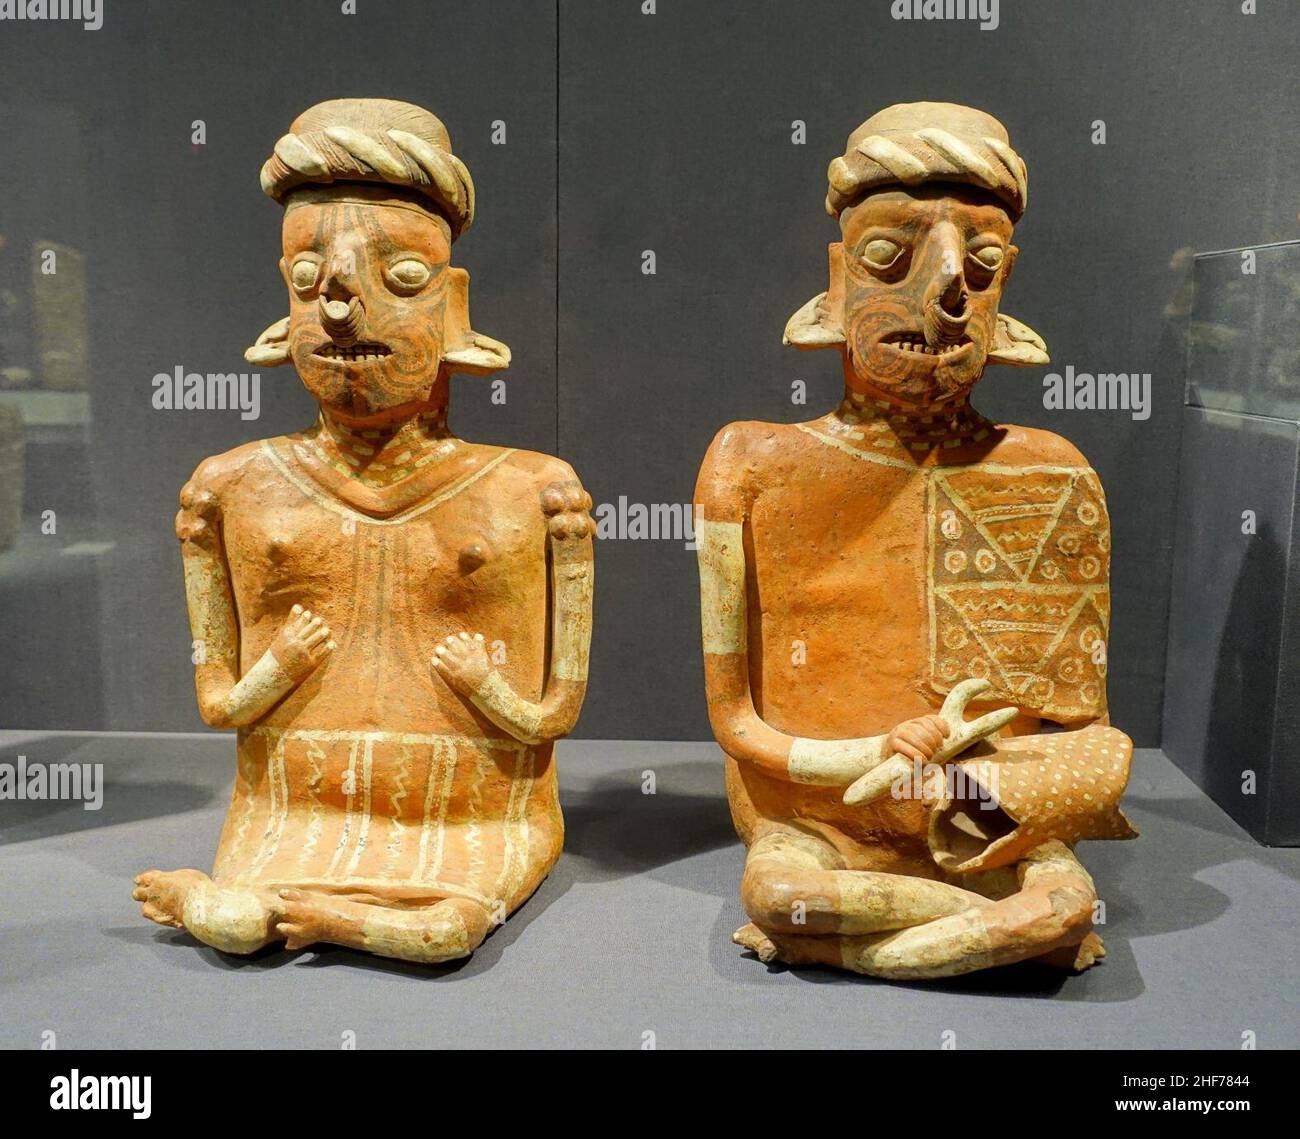 Seated couple, Ixtlan del Rio, Nayarit, Mexico, 200 BC to 200 AD, ceramic, polychrome slip Stock Photo